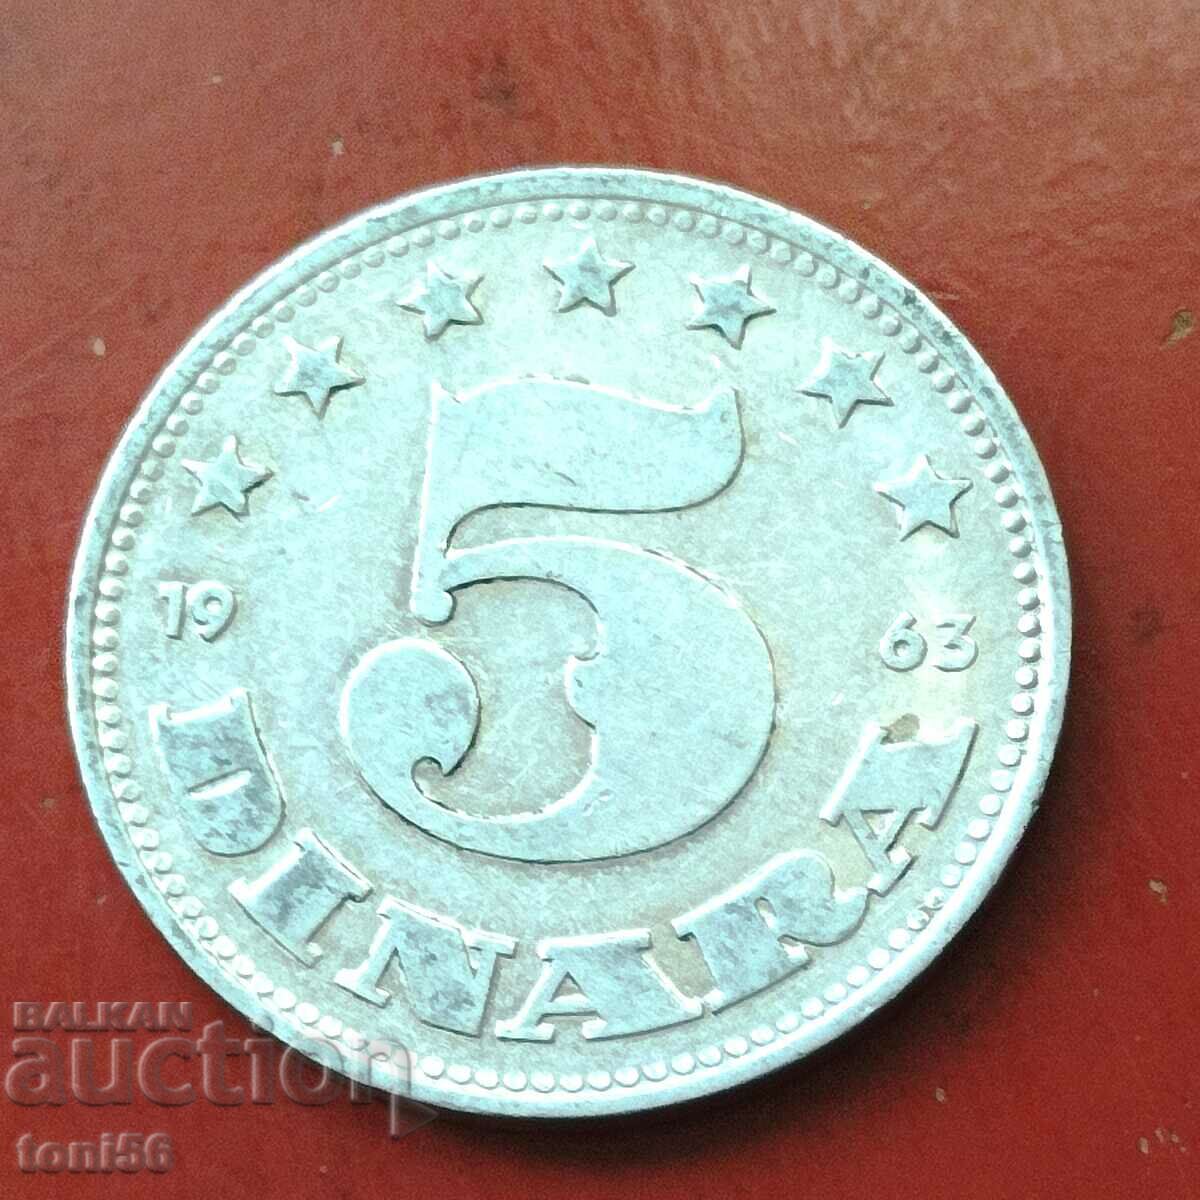 Yugoslavia 5 dinars 1963 quality